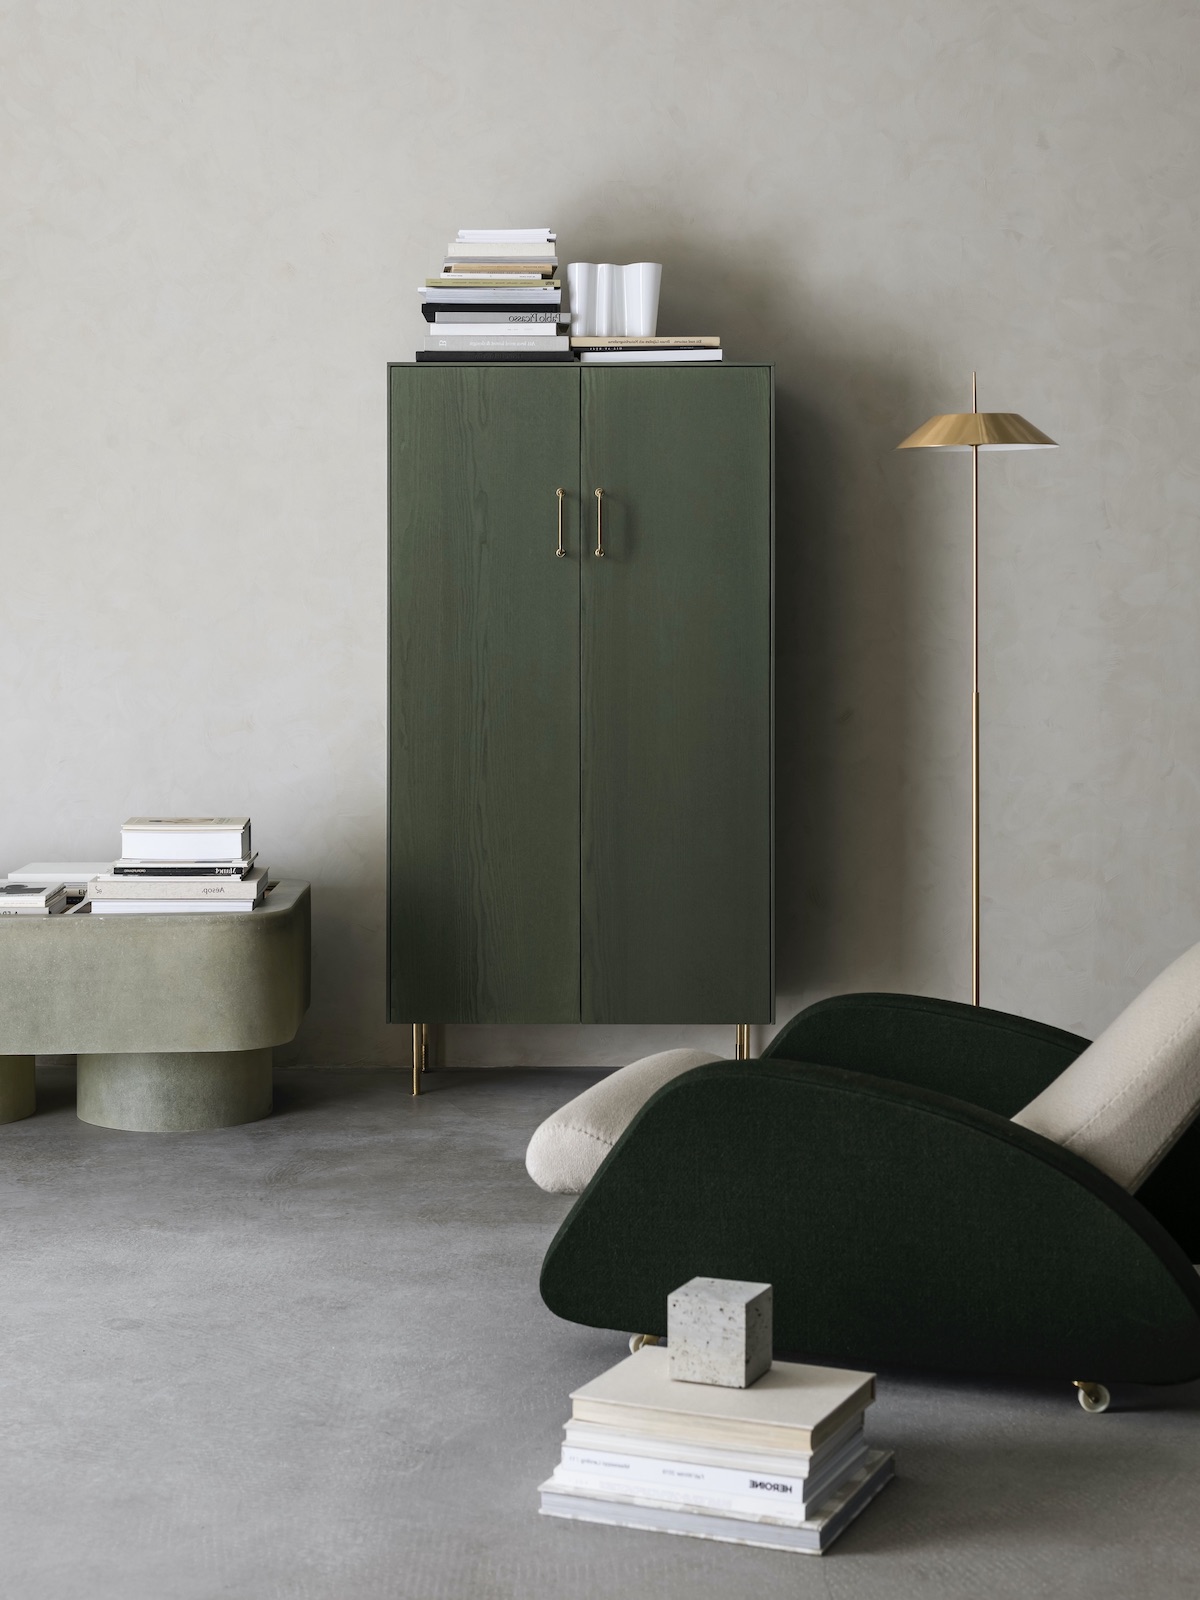 salon béton ciré meuble minimaliste nuance vert kaki